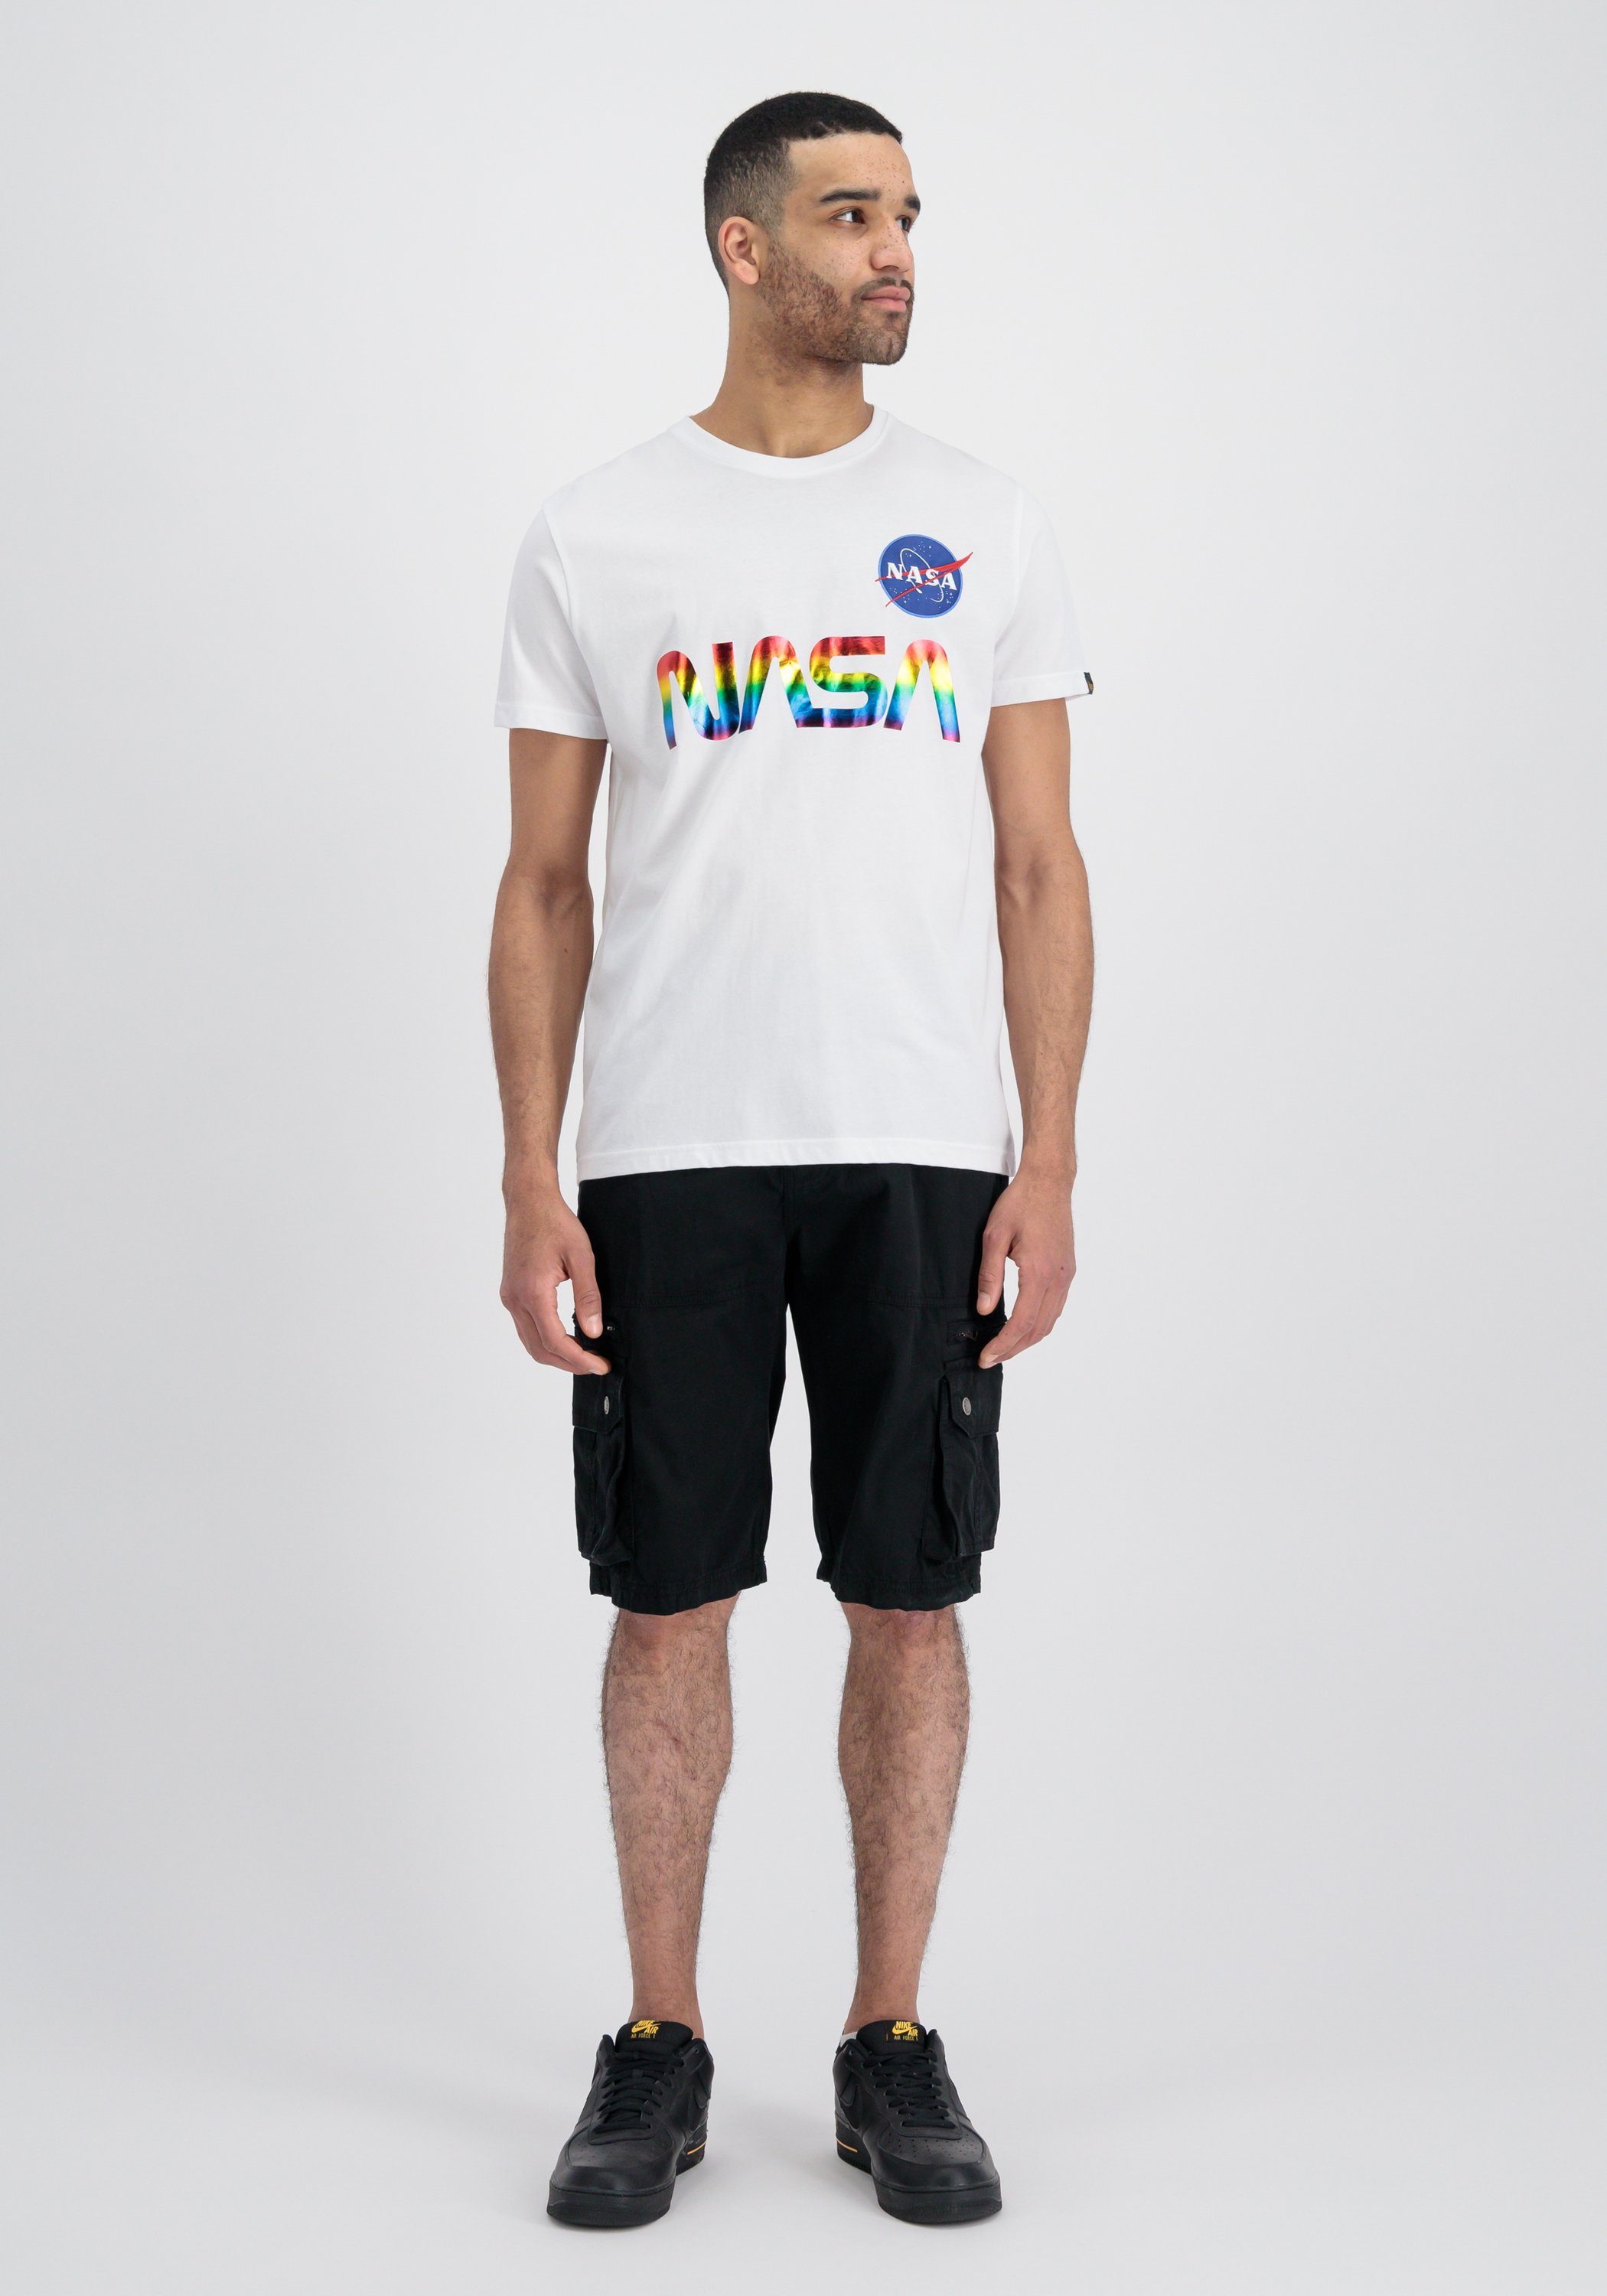 T OTTO | Metal de in NASA T-shirt online Refl. Industries Alpha - Alpha Industries T-Shirts shop Men